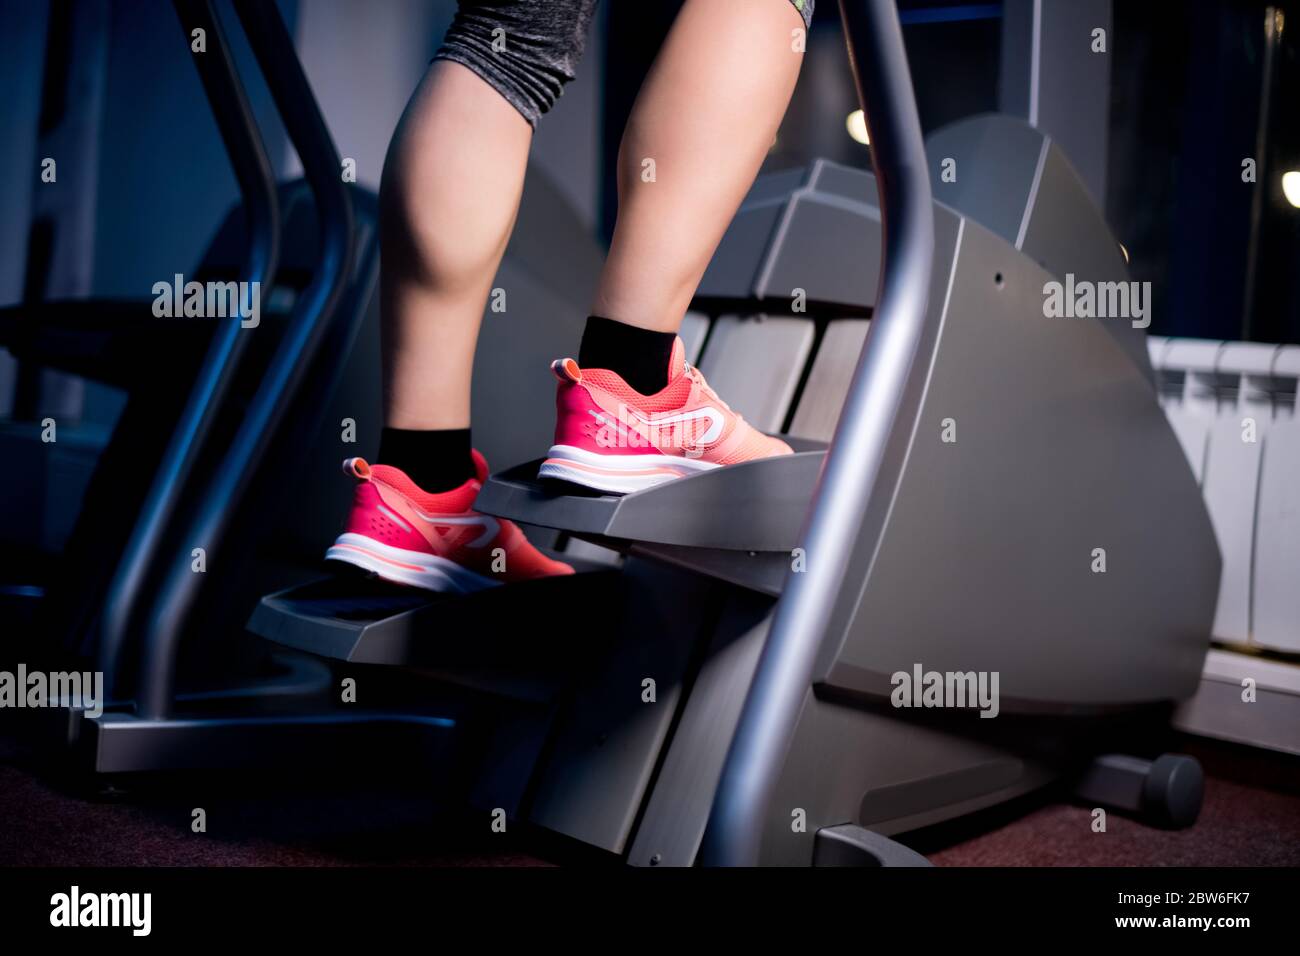 Step Machine Gym Immagini e Fotos Stock - Alamy